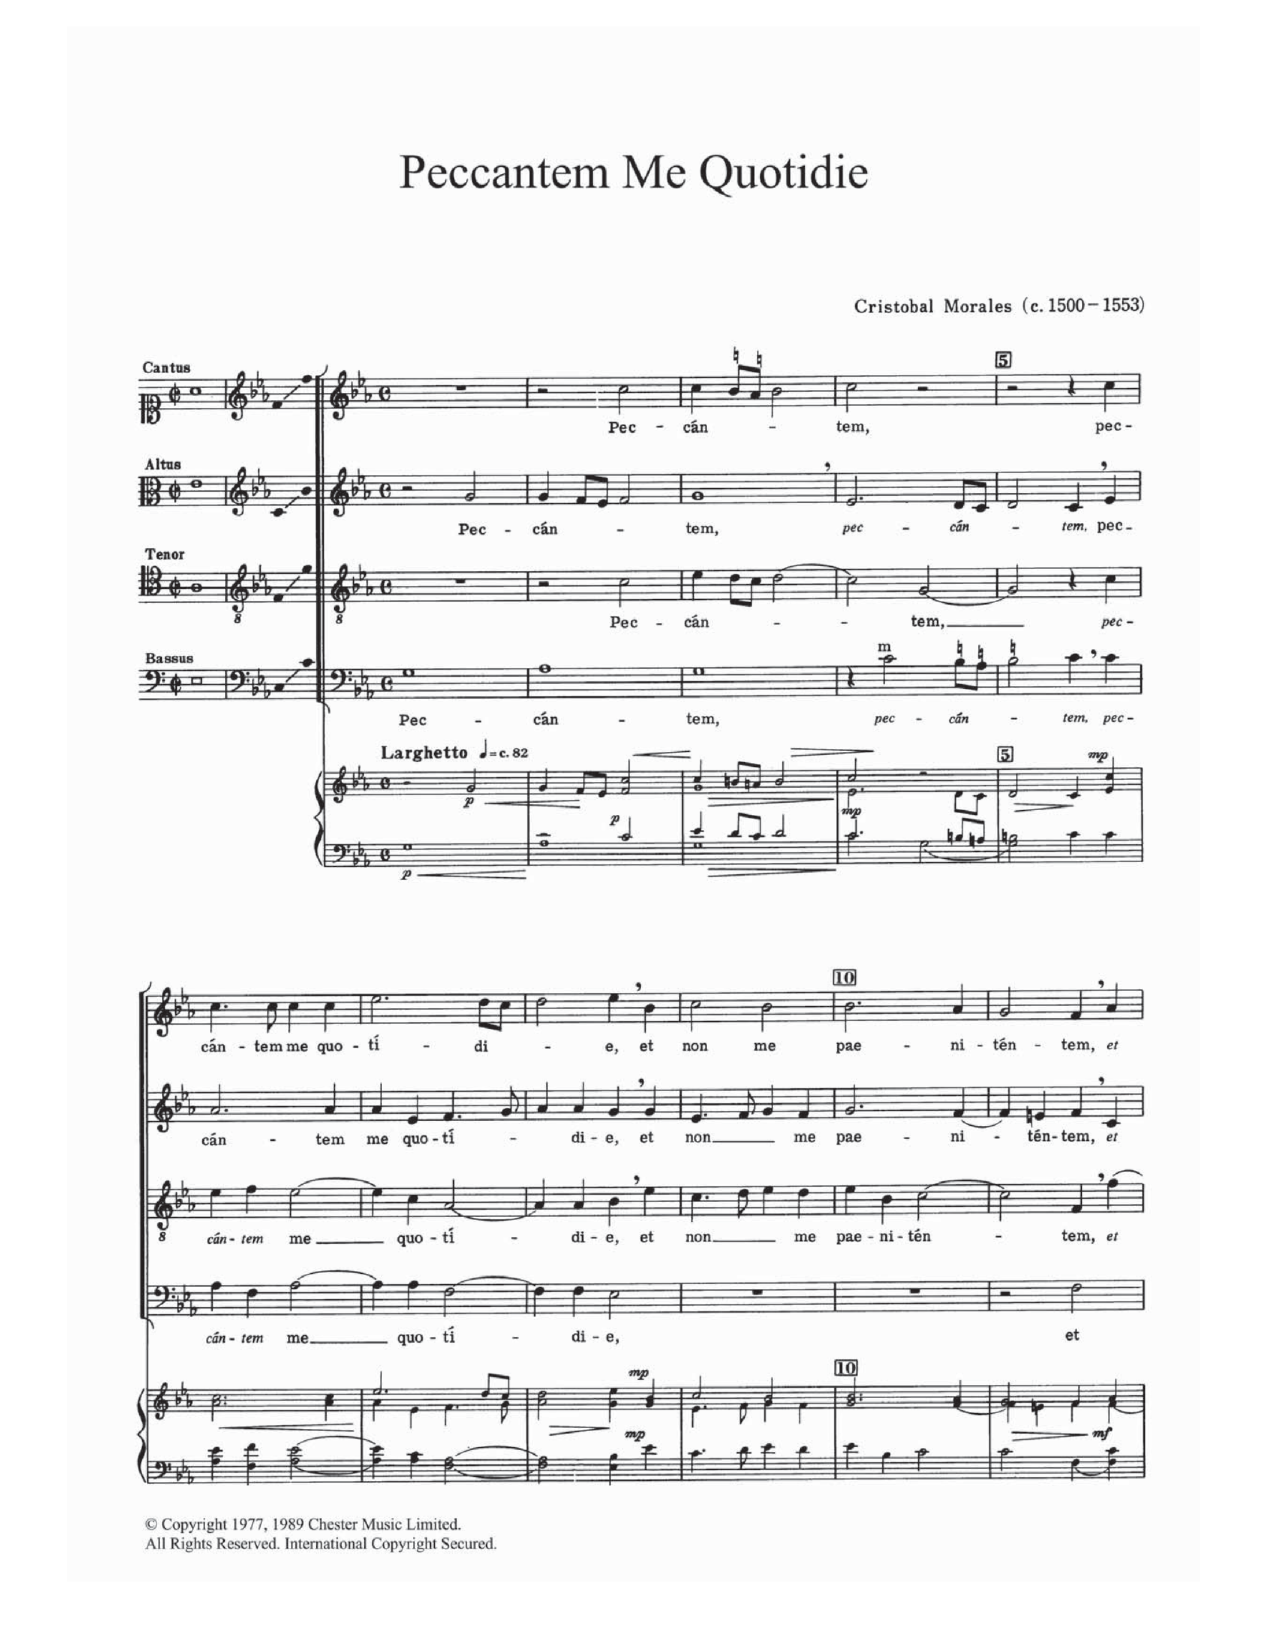 Cristobal de Morales Peccantem Me Quotidie sheet music notes and chords arranged for Choir